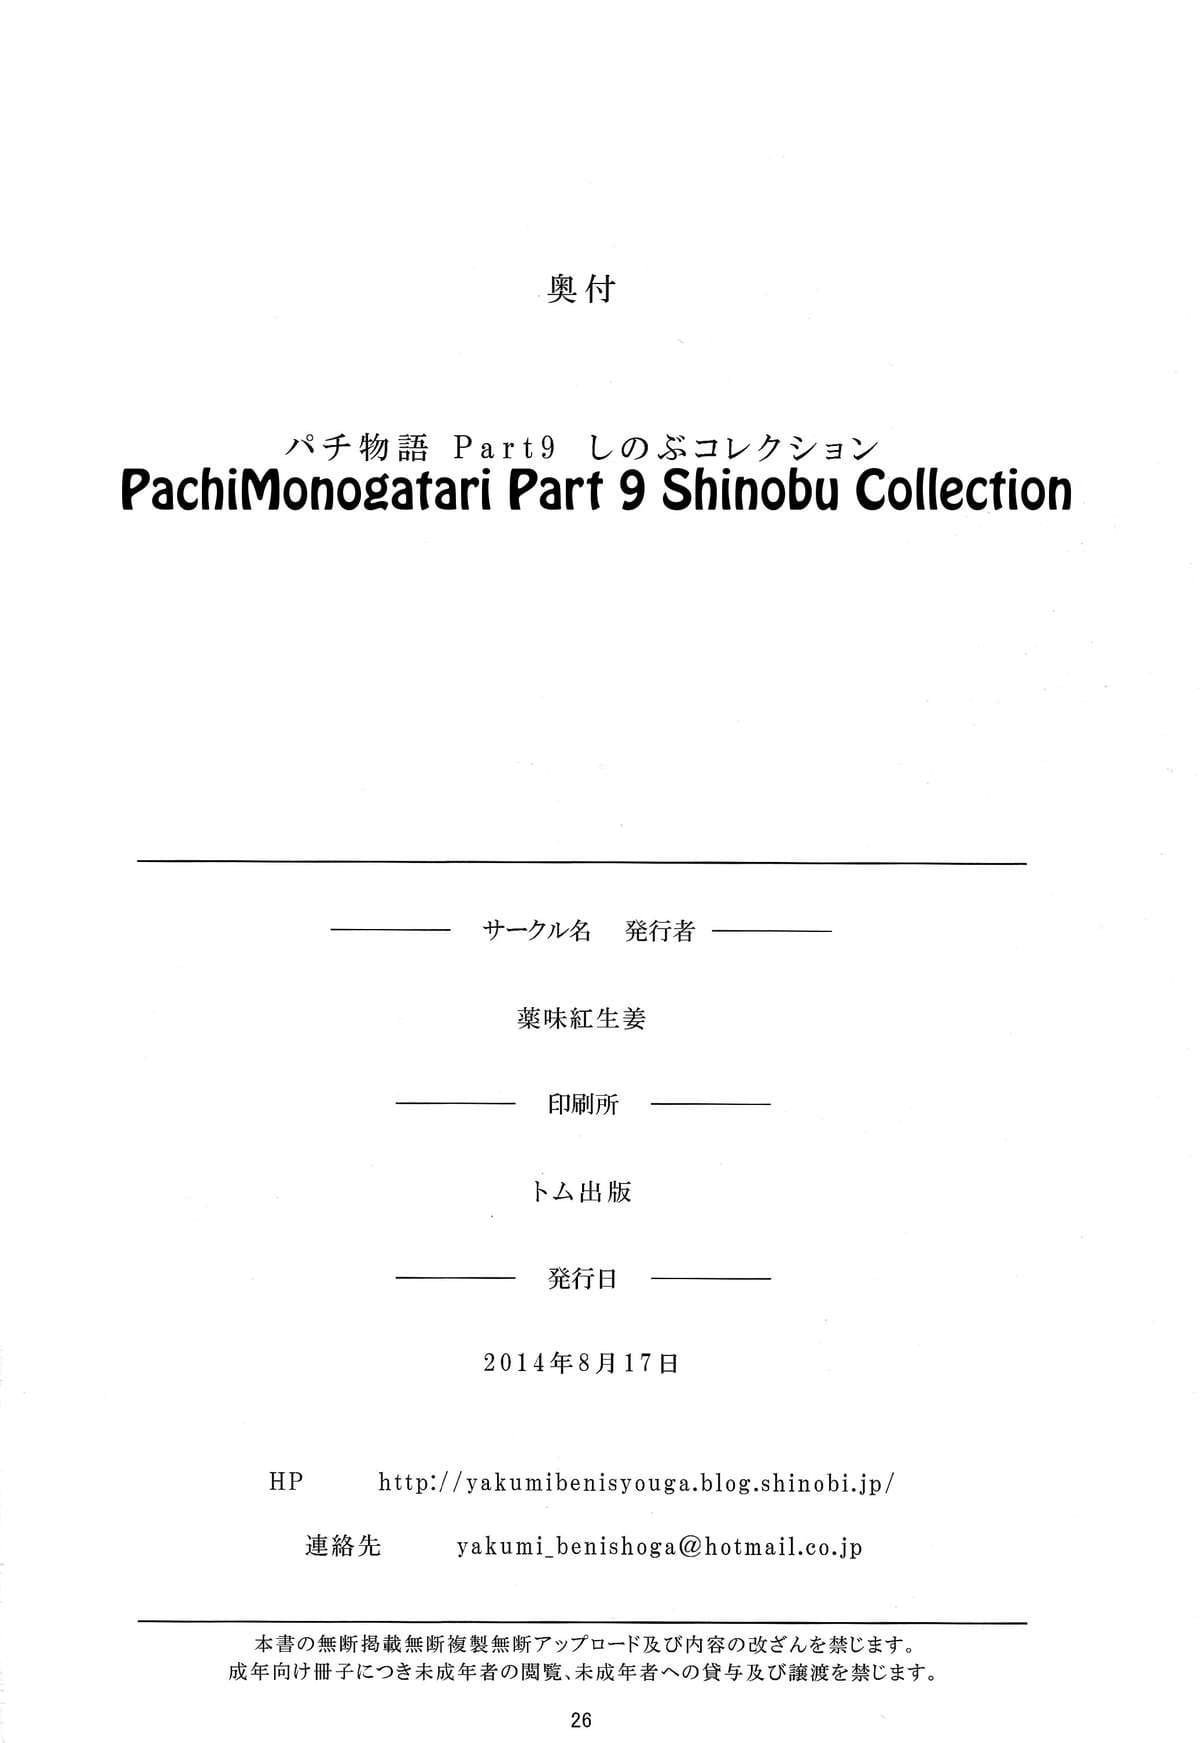 Pachimonogatari Part 9 Shinobu Collection - 25